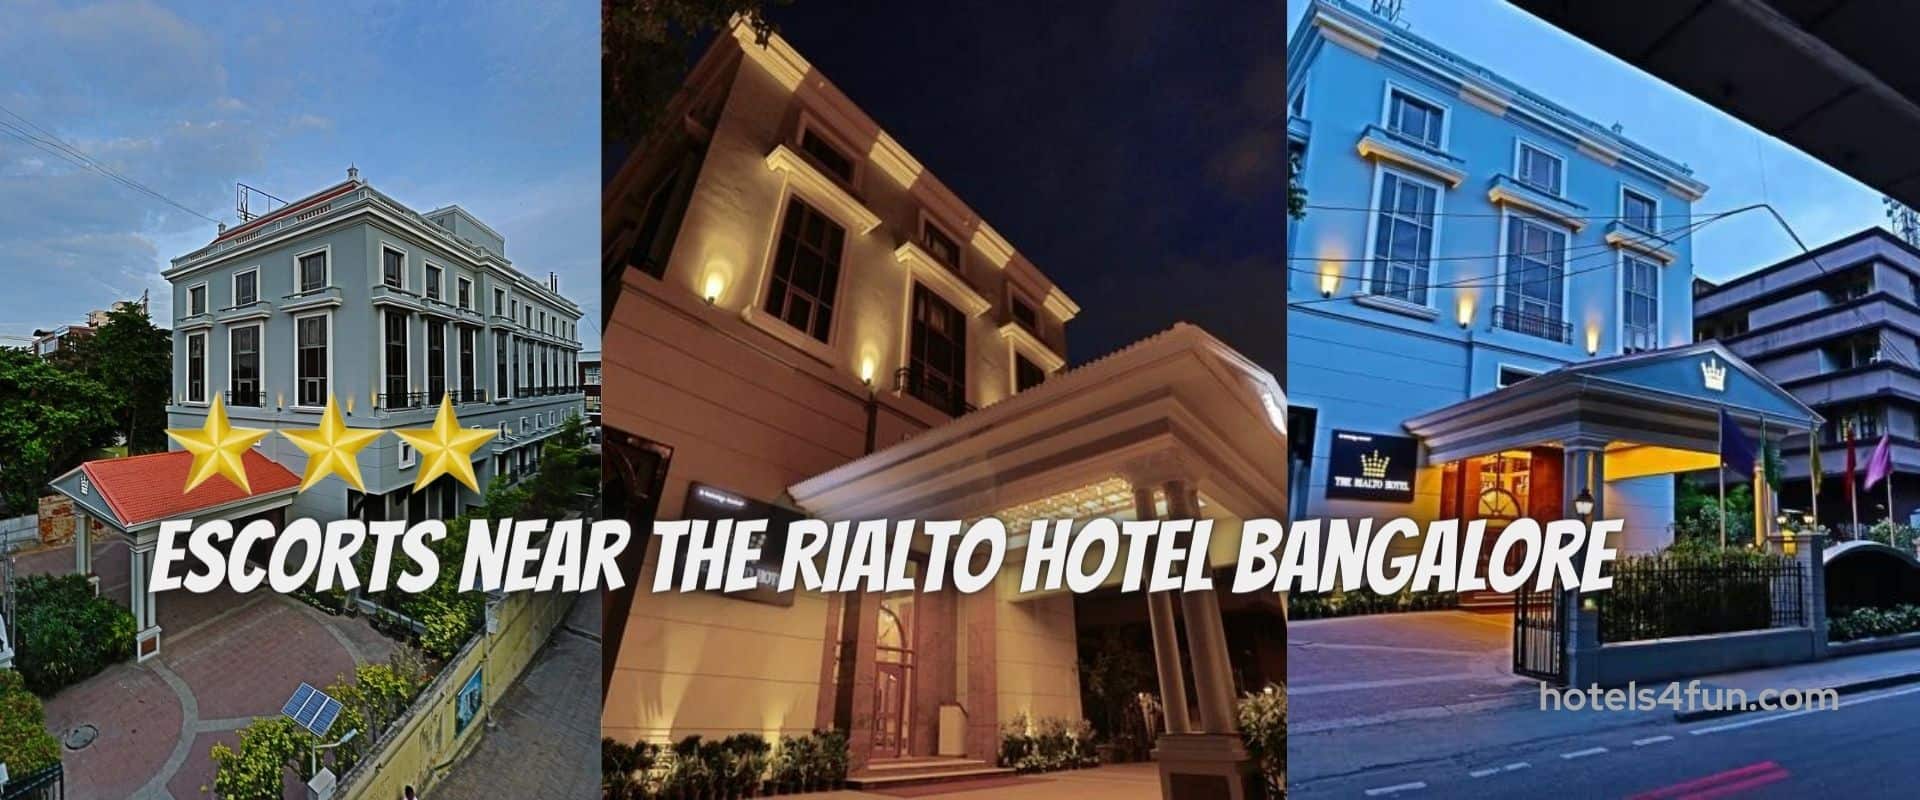 escorts-near-the-rialto-hotel-bangalore Hotel Escorts